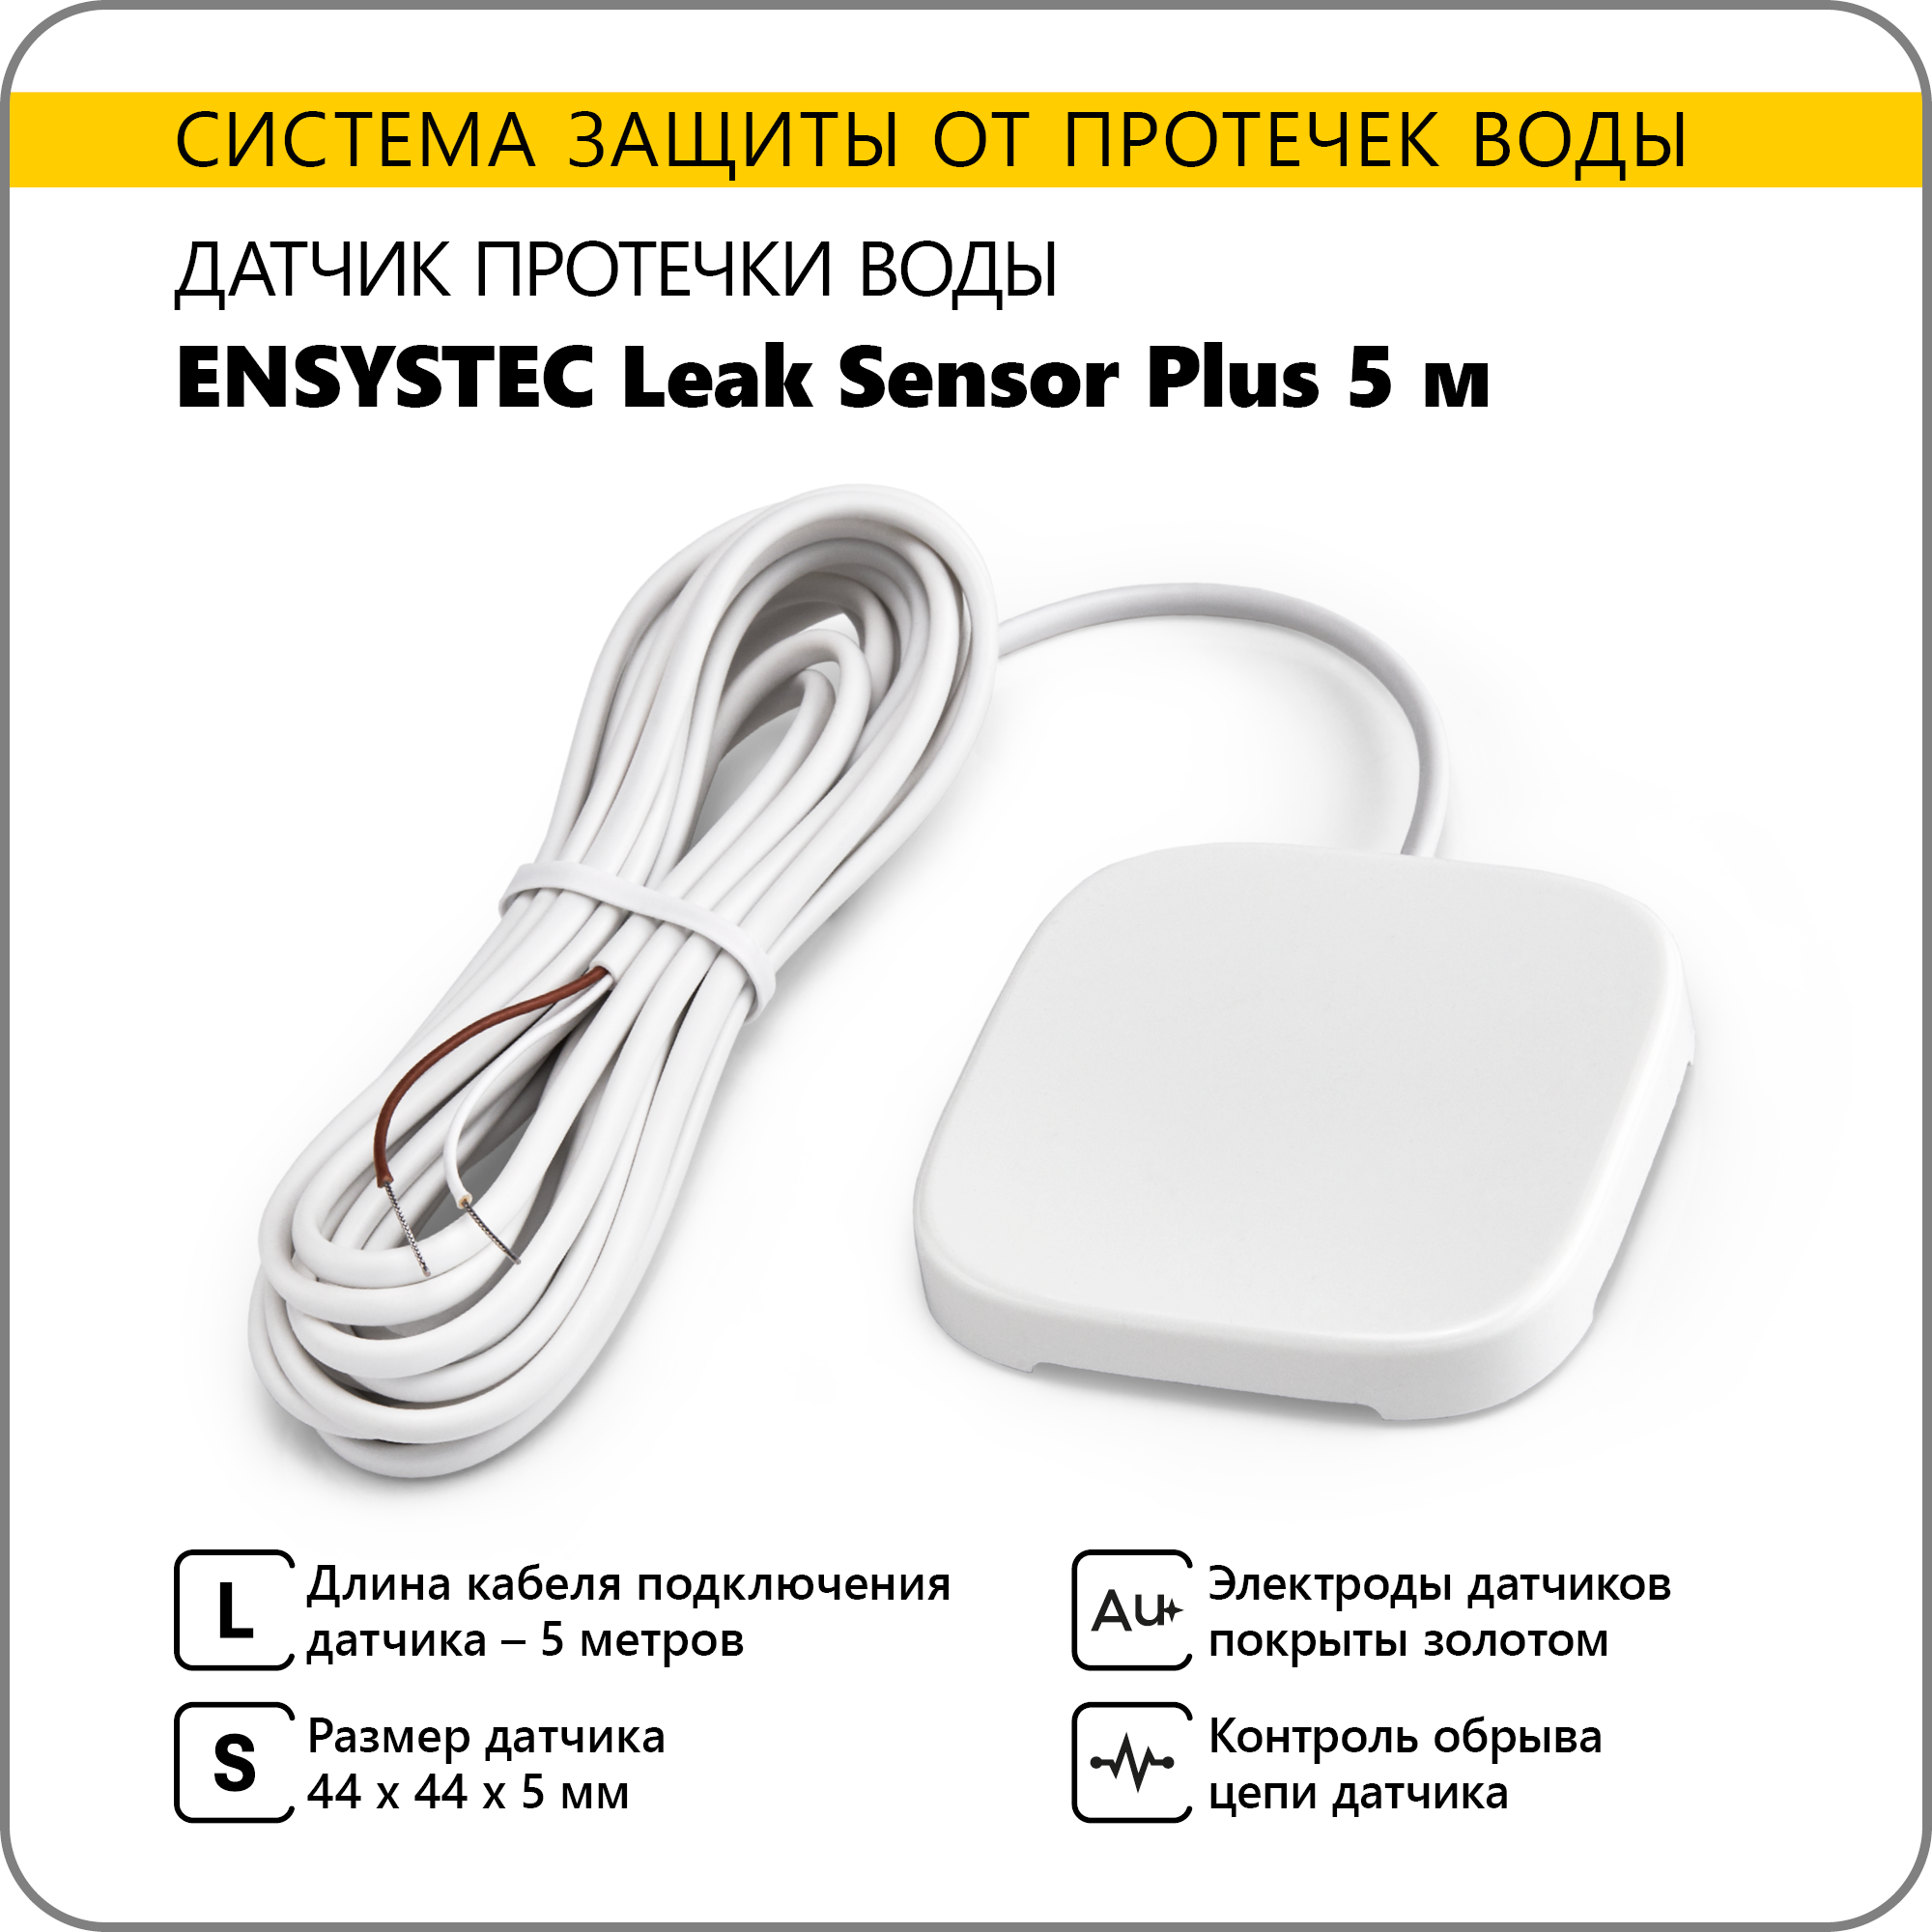 Датчик протечки воды Ensystec Leak Sensor Plus 5 м